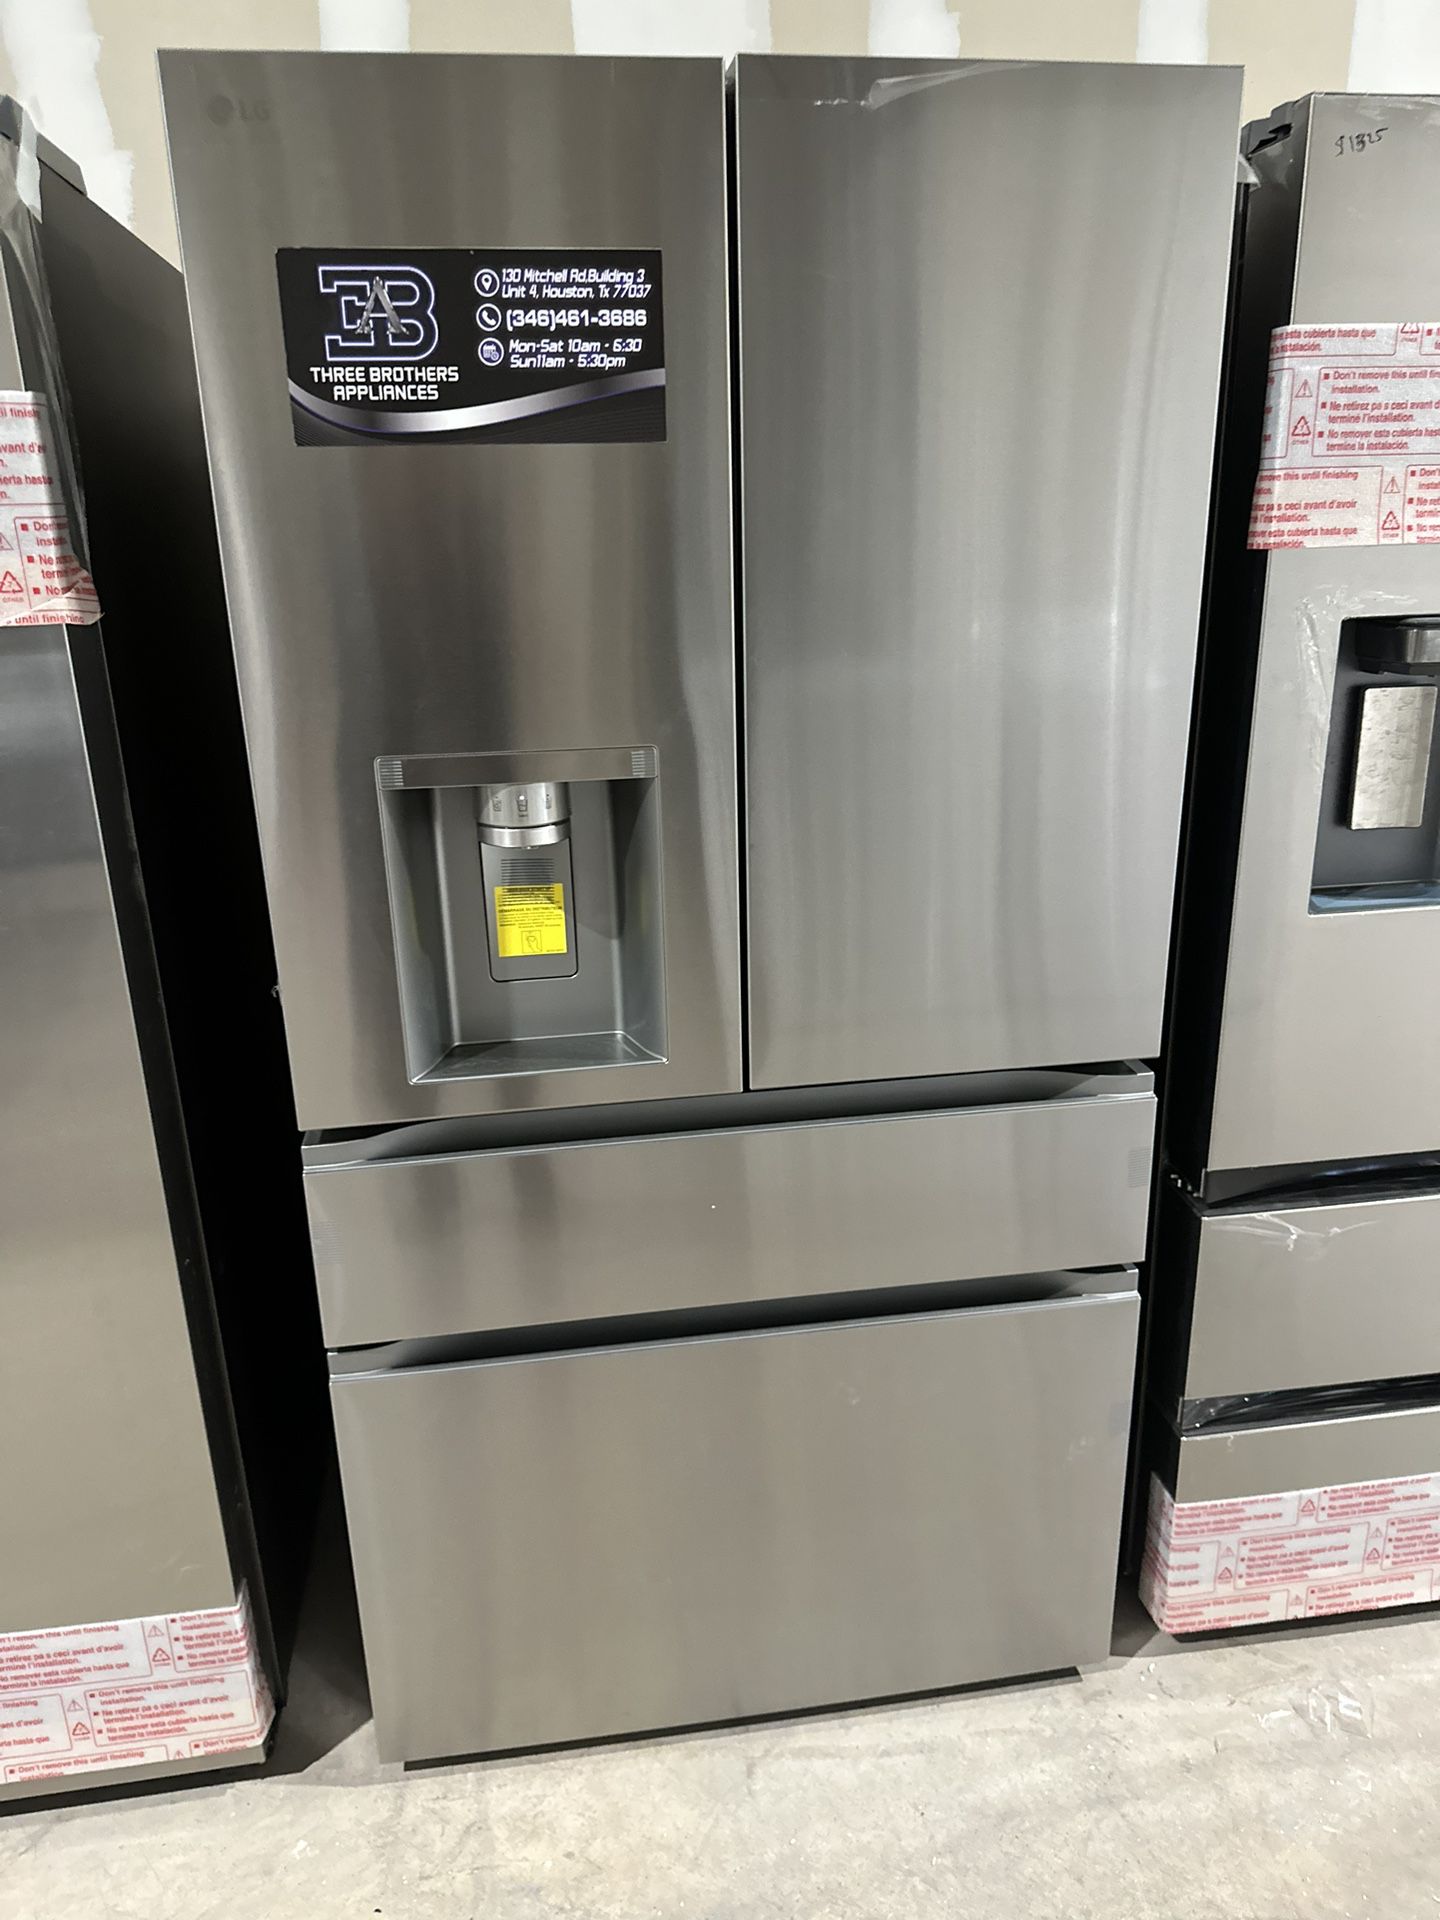 LG Large Capacity Refrigerator 